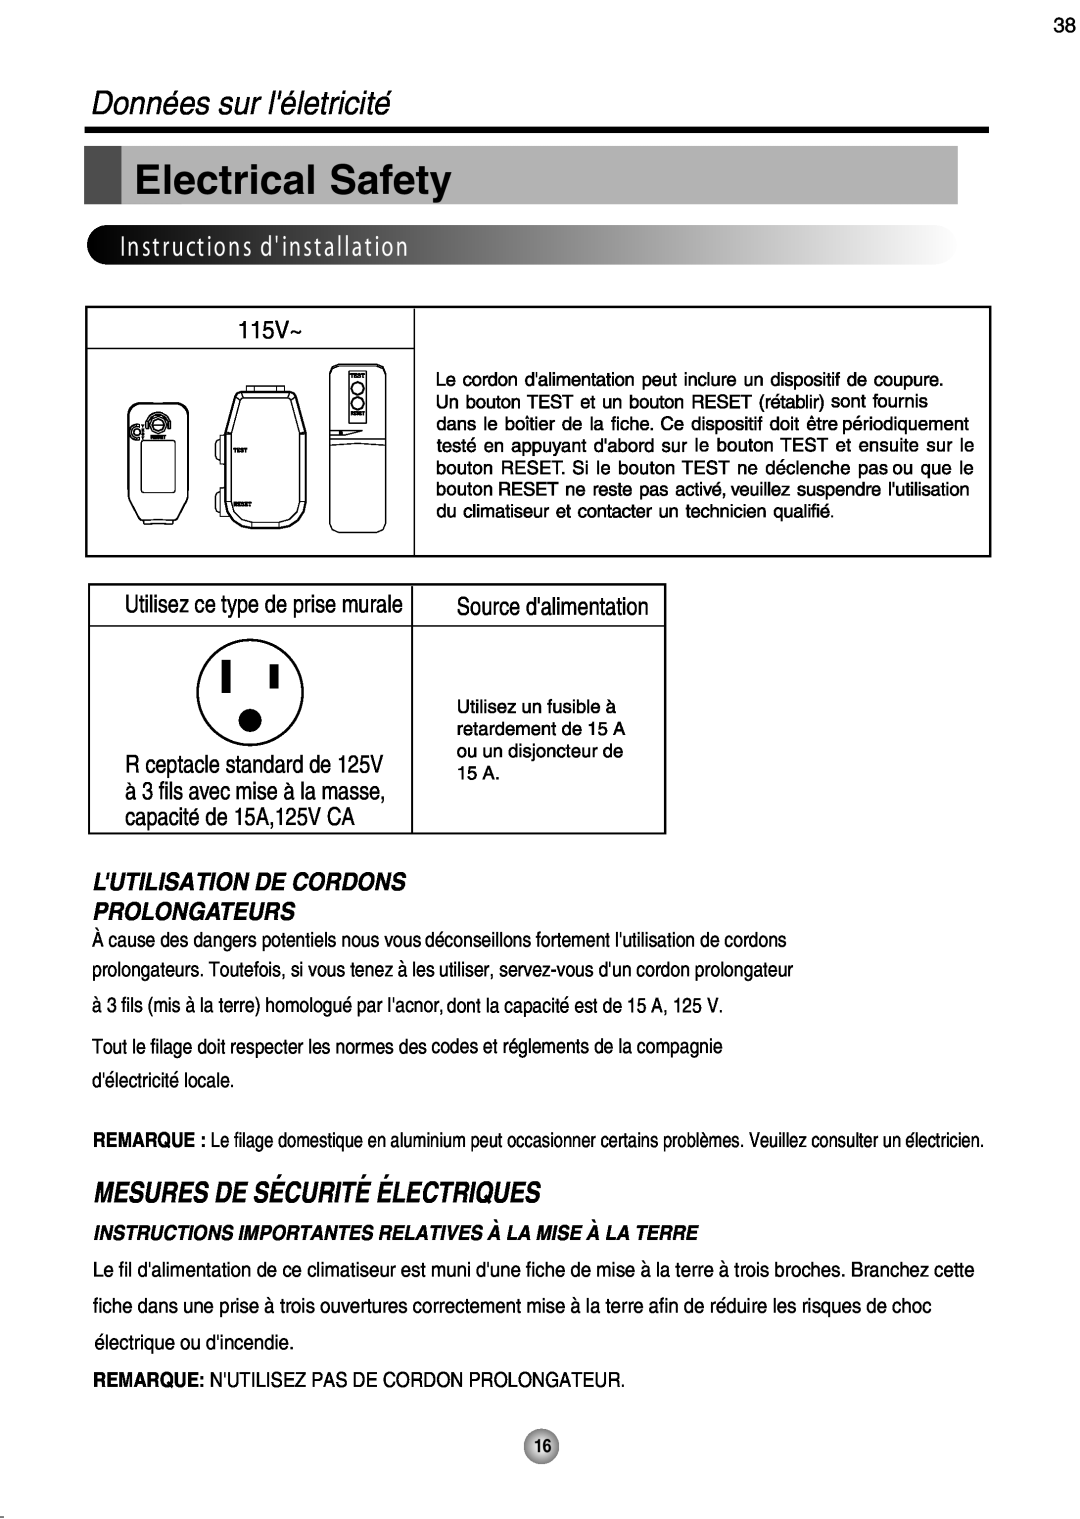 Friedrich ZQ10, ZQ08 sur leletricite` `, Electrical Safety, ElectricalIns u onDatas d insta lla tion, Donnees`, 115V~ 